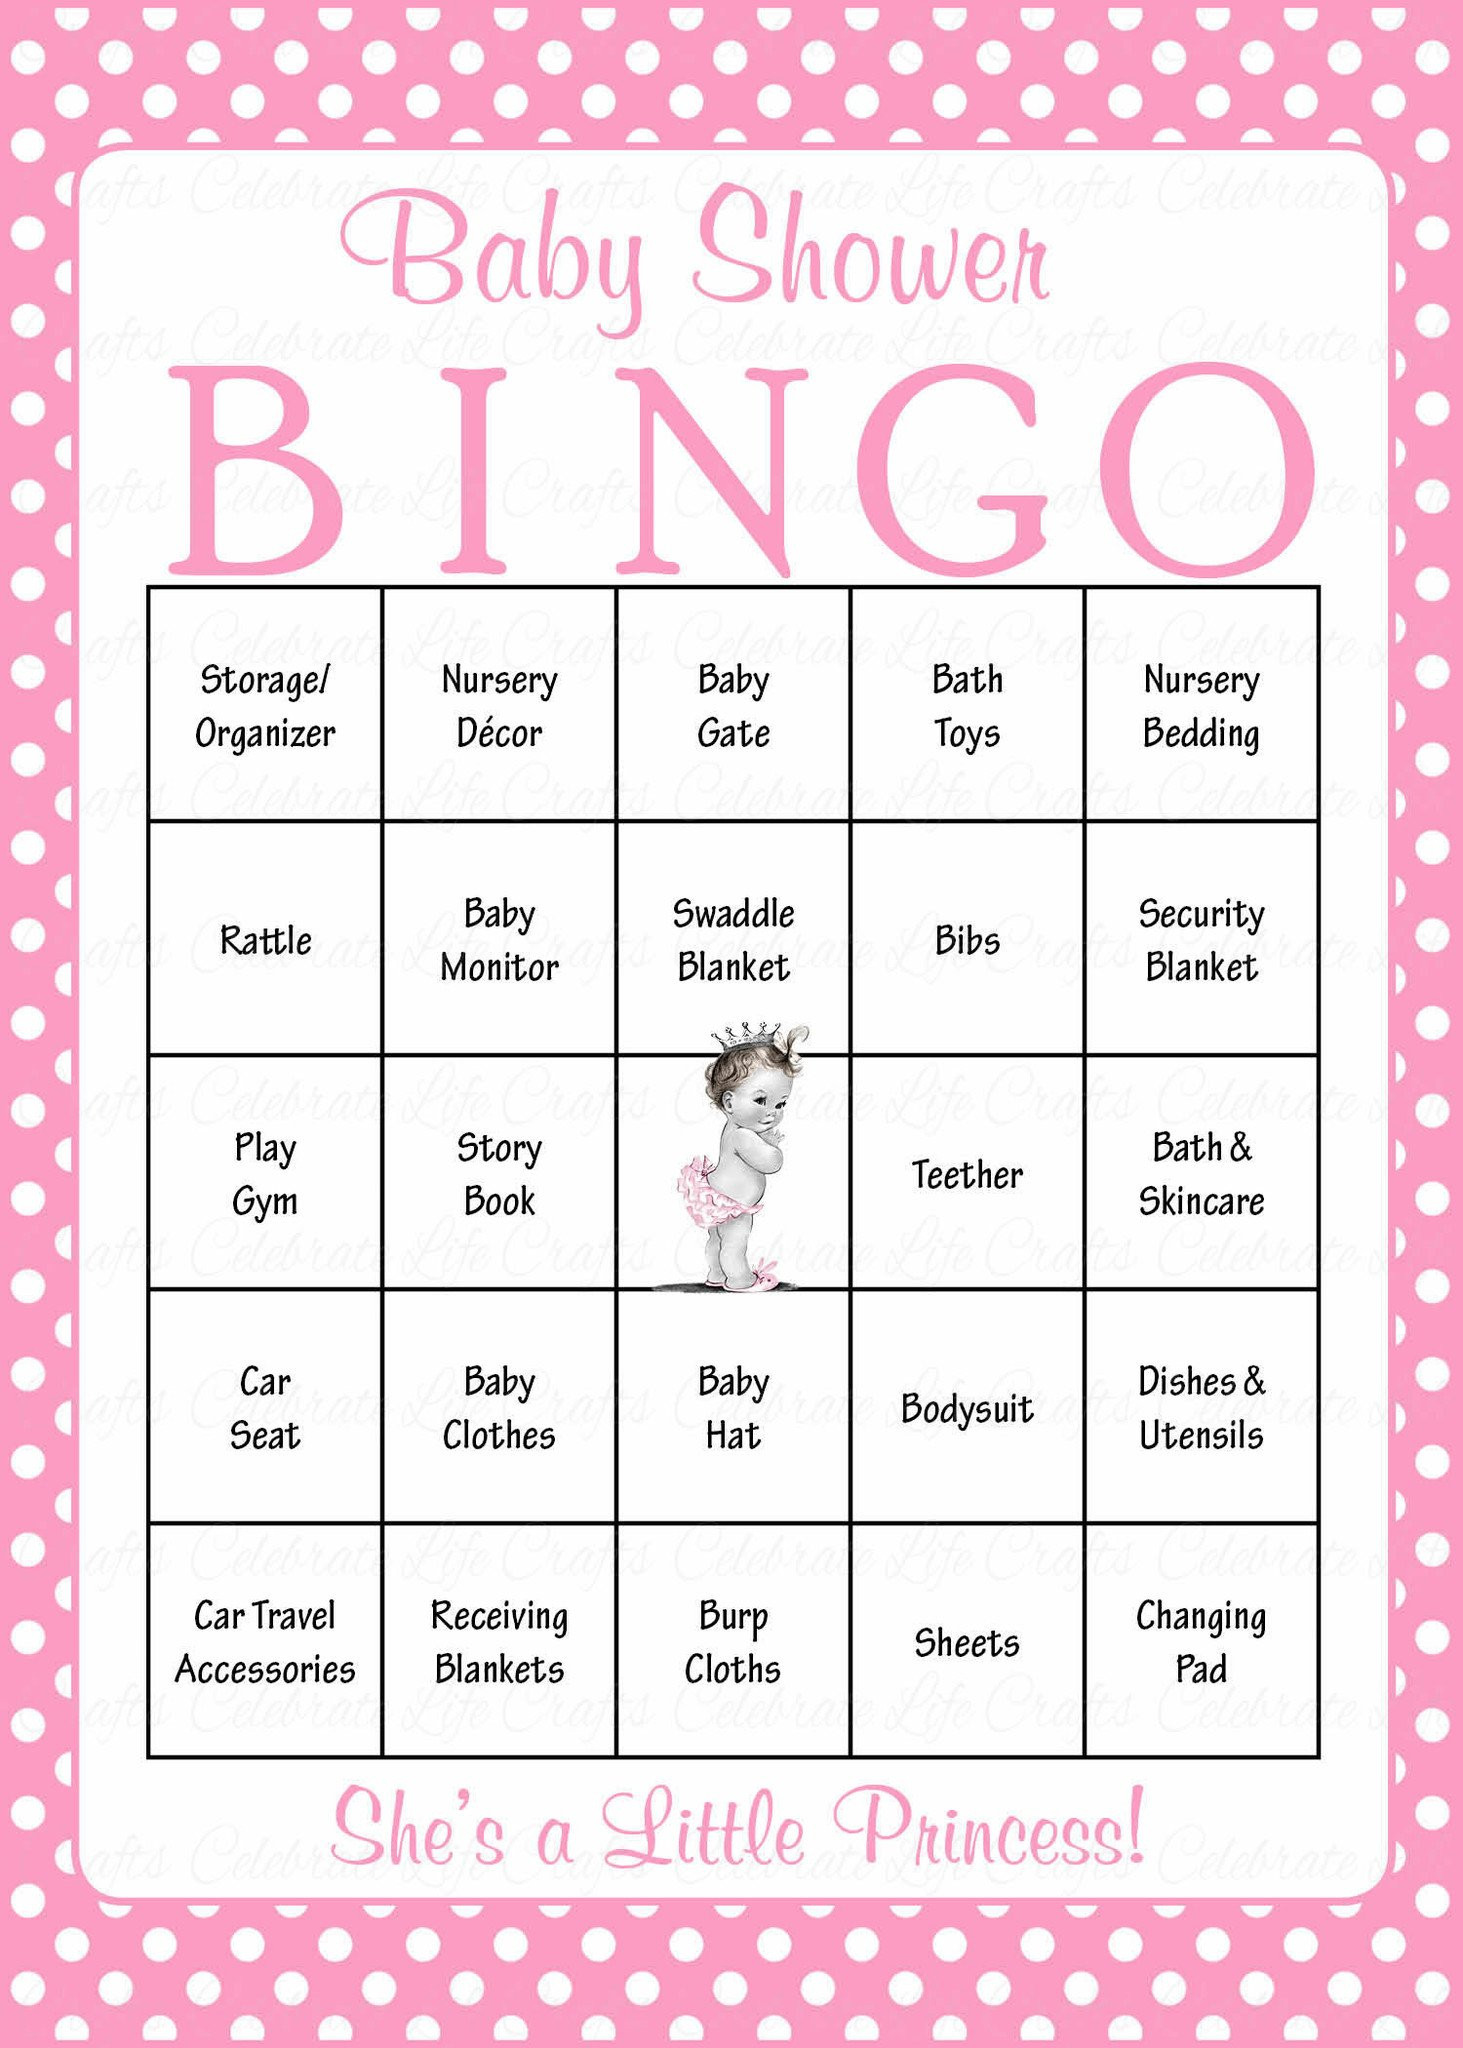 Baby Shower Gift Bingo Printable
 Princess Baby Shower Game Download for Girl